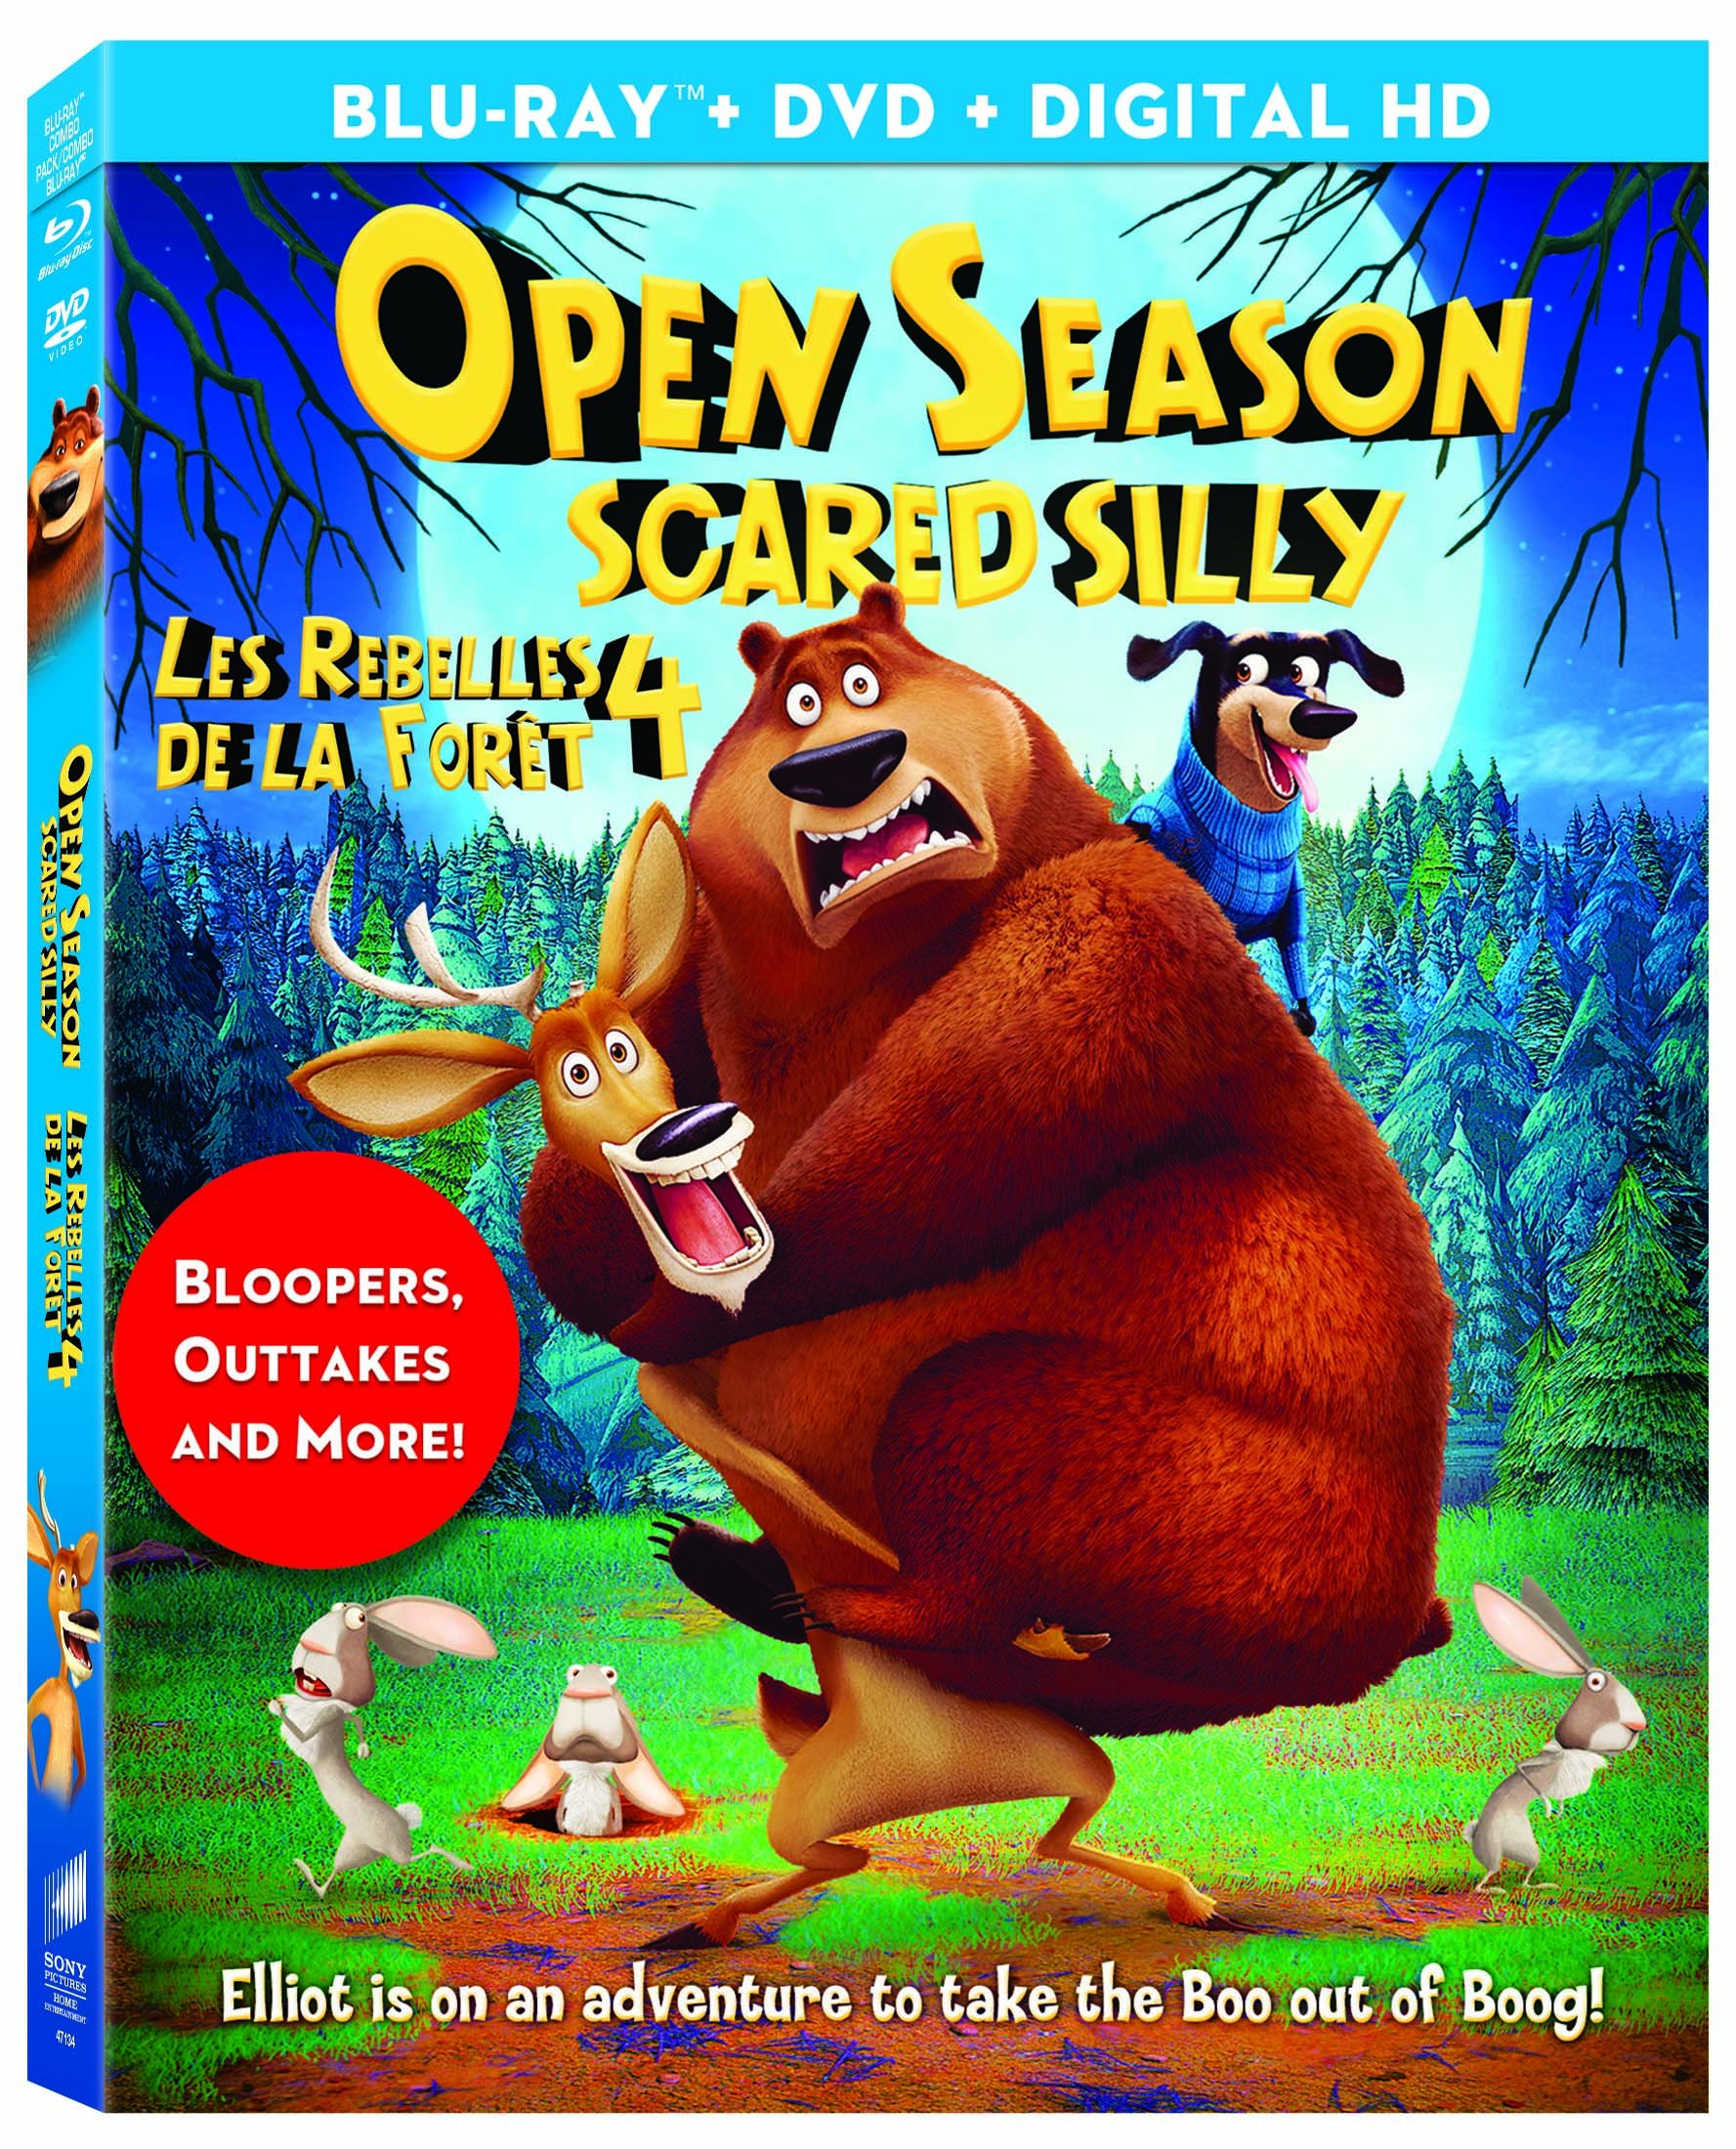 Open Season Scared Silly [Blu-ray + DVD + Digital Copy] (Bilingual) on MovieShack